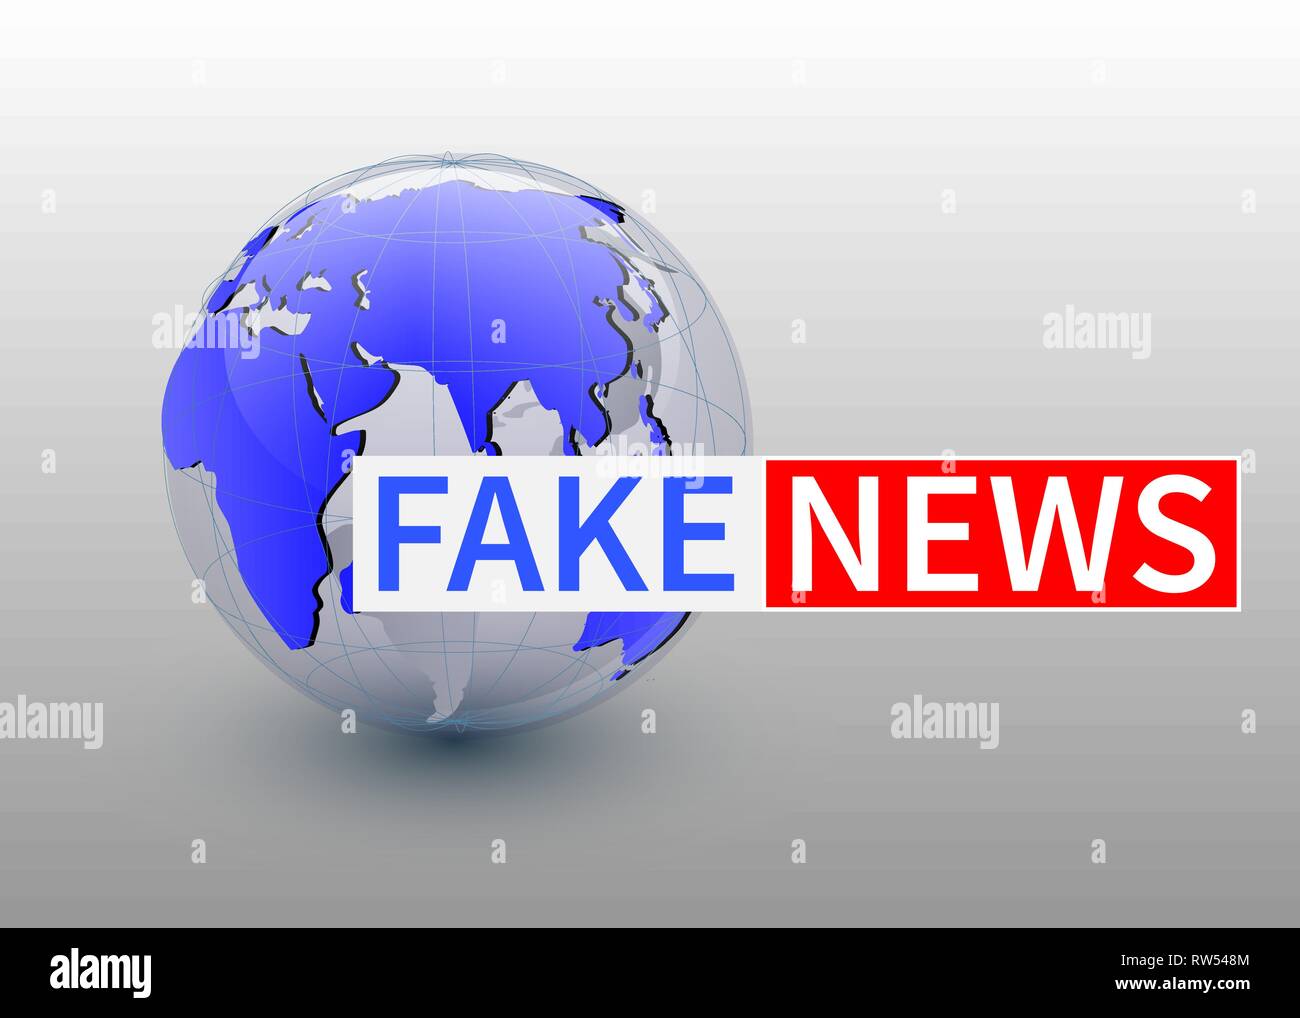 fake news live screen template on digital world map background Stock Photo  - Alamy